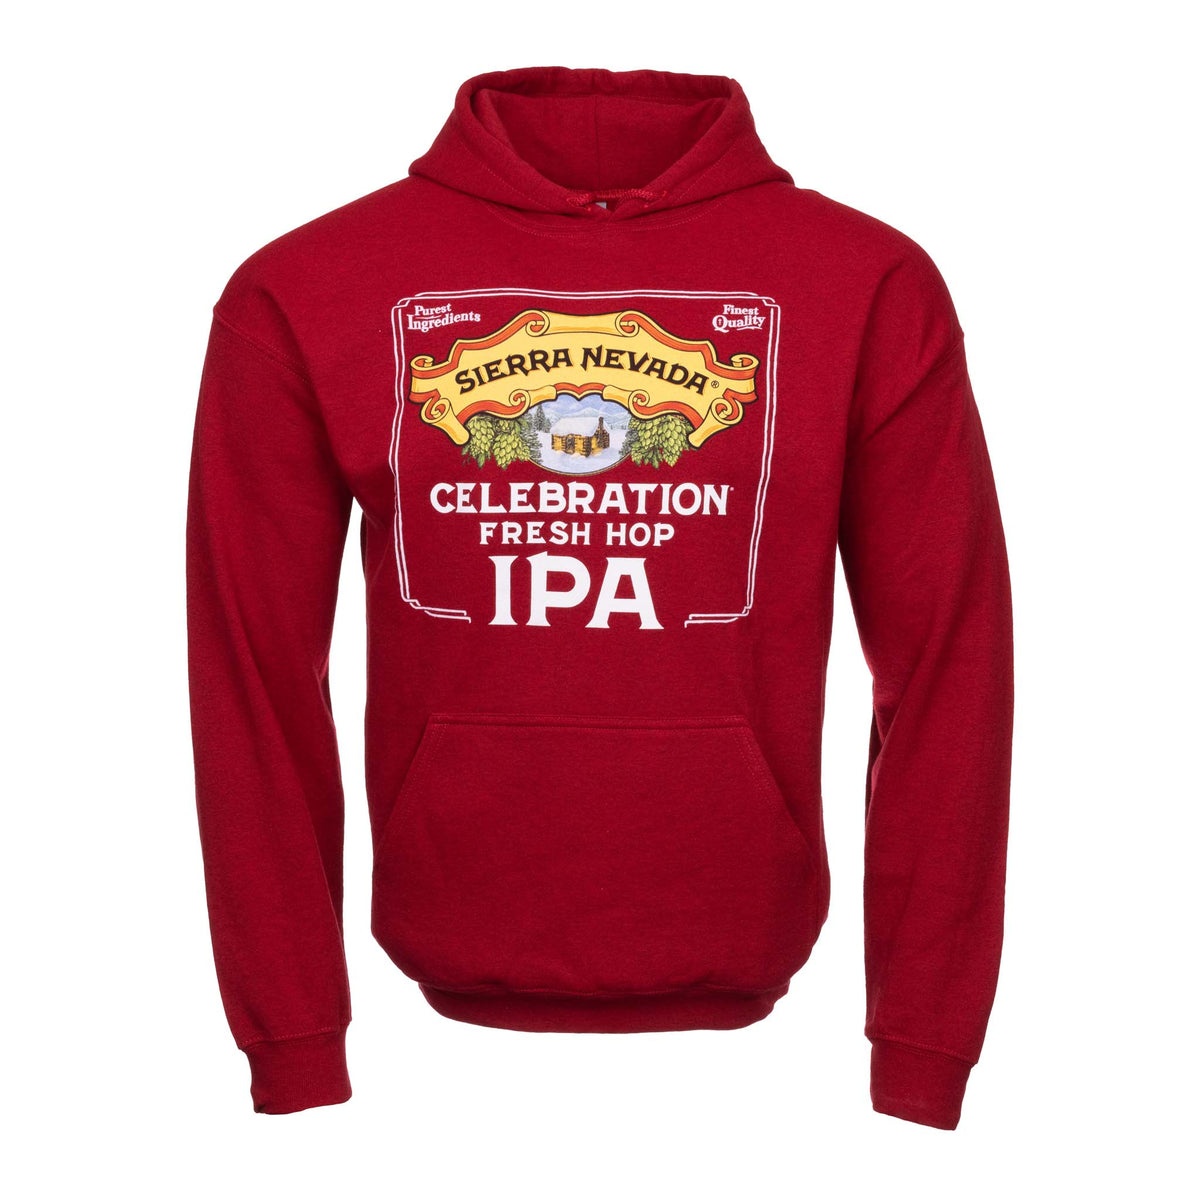 Sierra Nevada Celebration IPA Sweatshirt - Front view